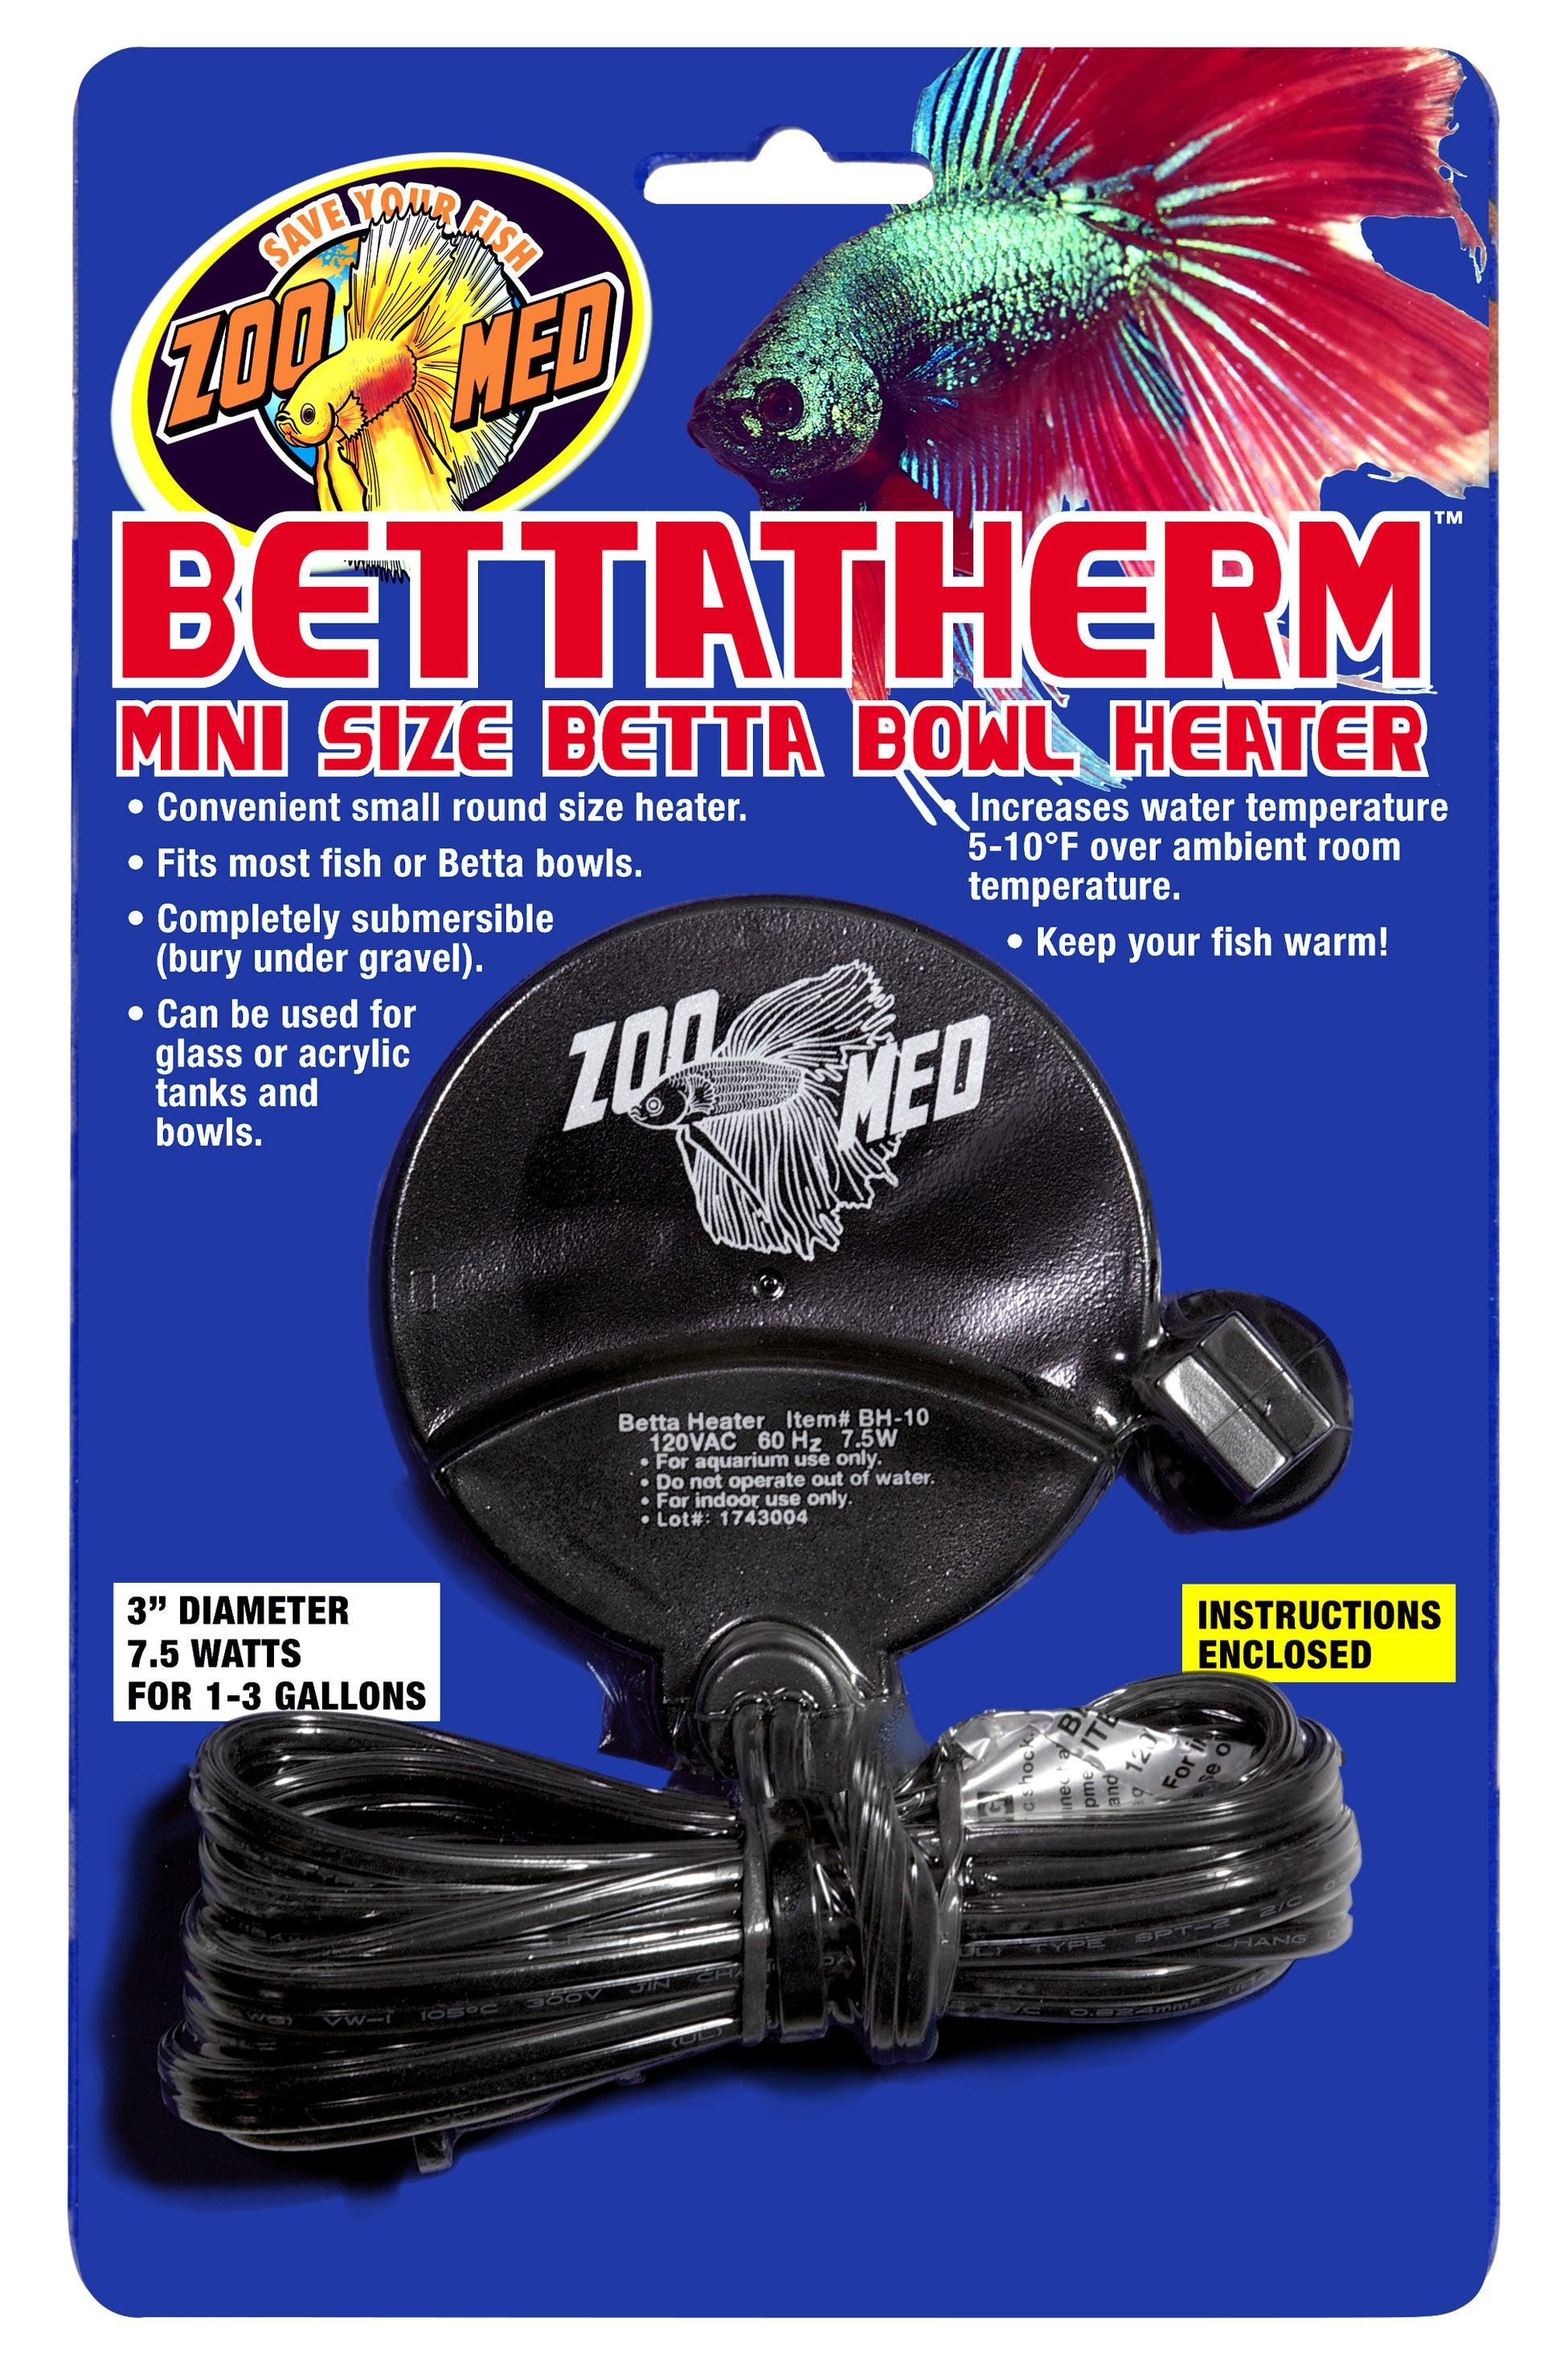 zoo-med-bettatherm-mini-size-betta-bowl-heater